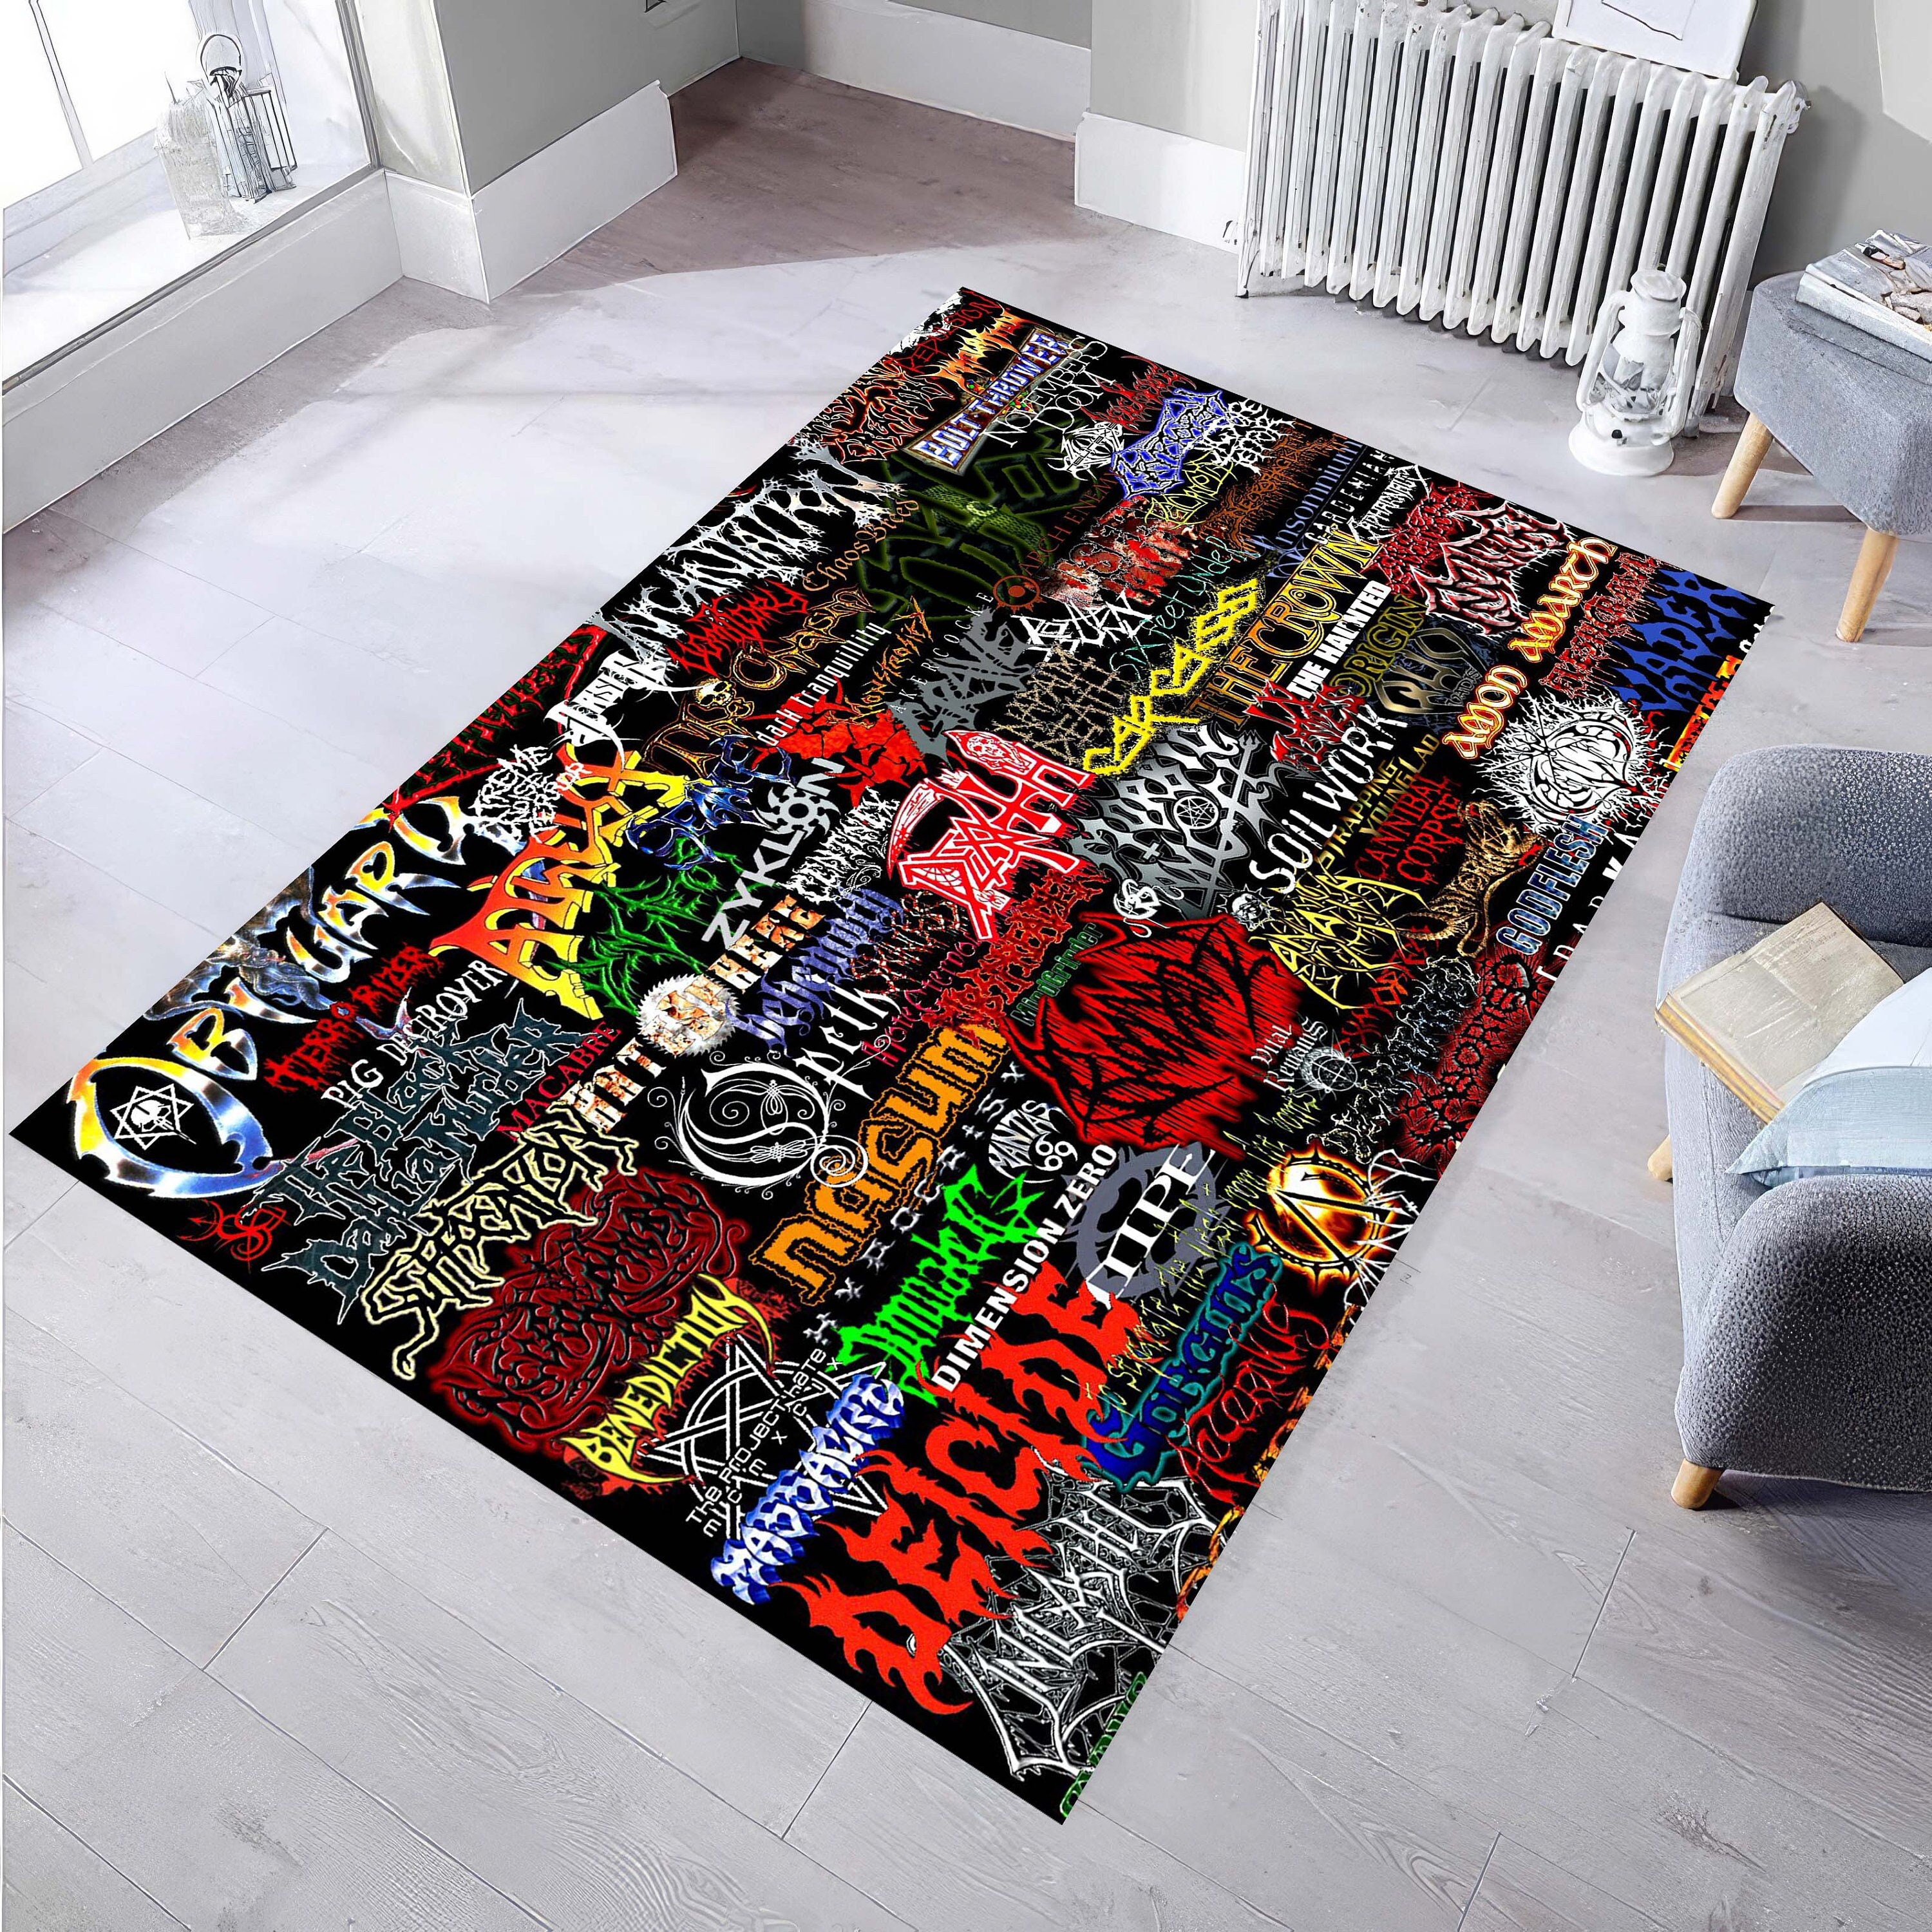 Discover Rock Music Group Carpet, Metal Music Logo Carpet, Famous Rock Band Logos Rug, Teenage Room Music Mat, Heavy Metal Rug, Gift For Music Lover